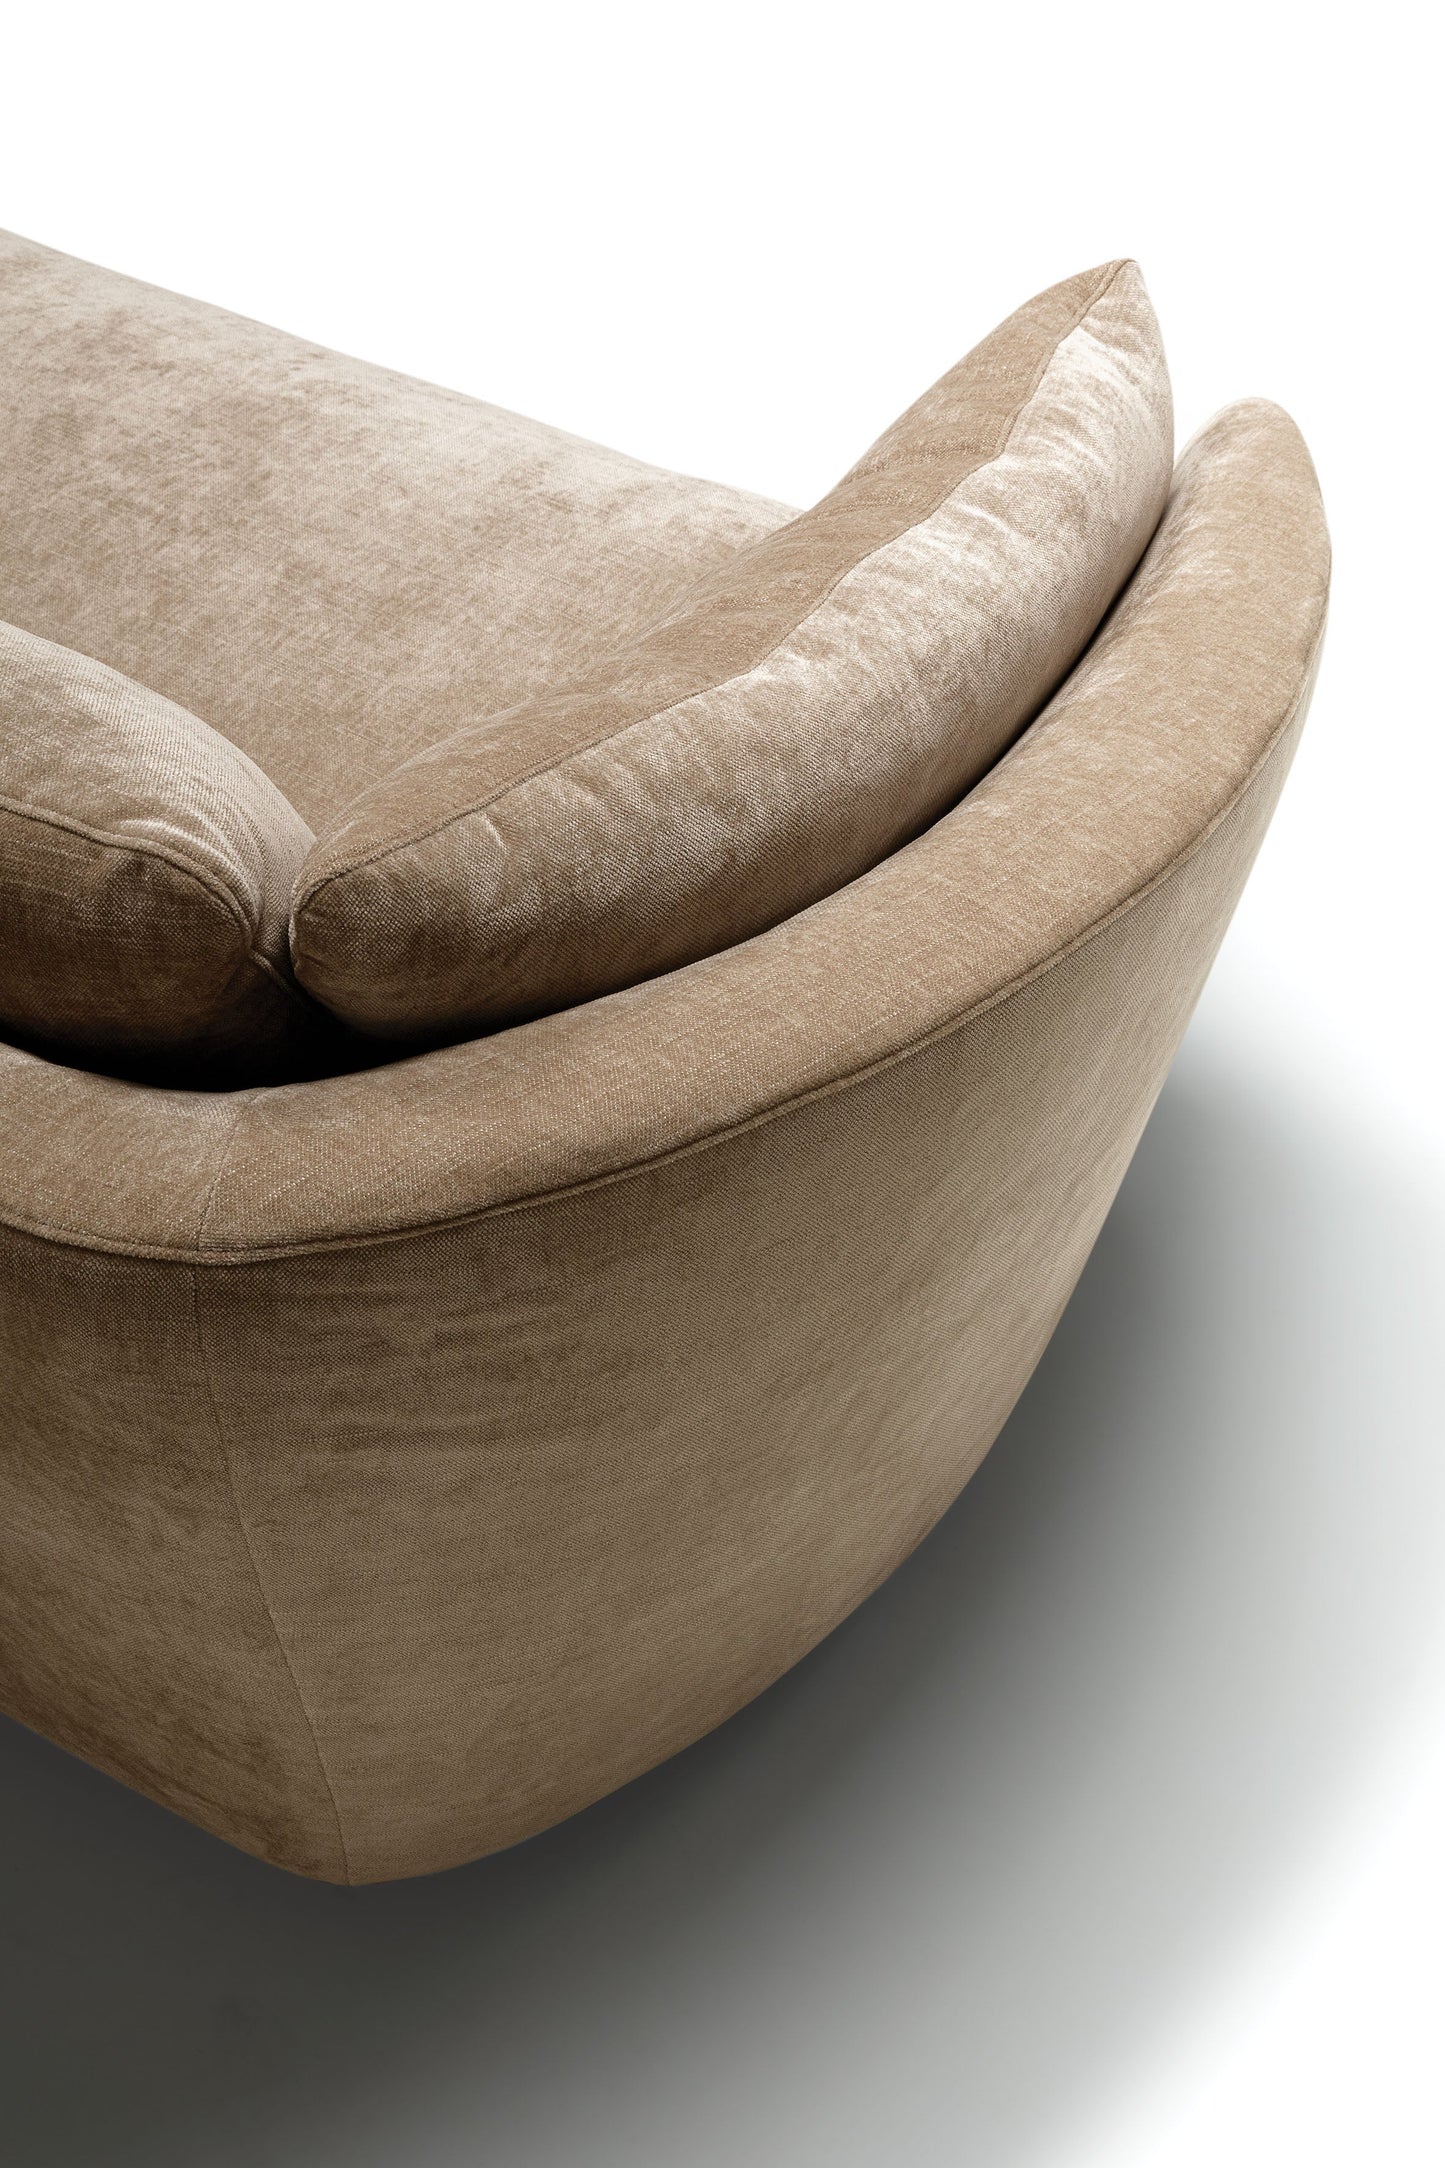 BONNIE 3XL-seter sofa, flere tekstil valg, en del av kategorien 4-seter - At Home Interiør